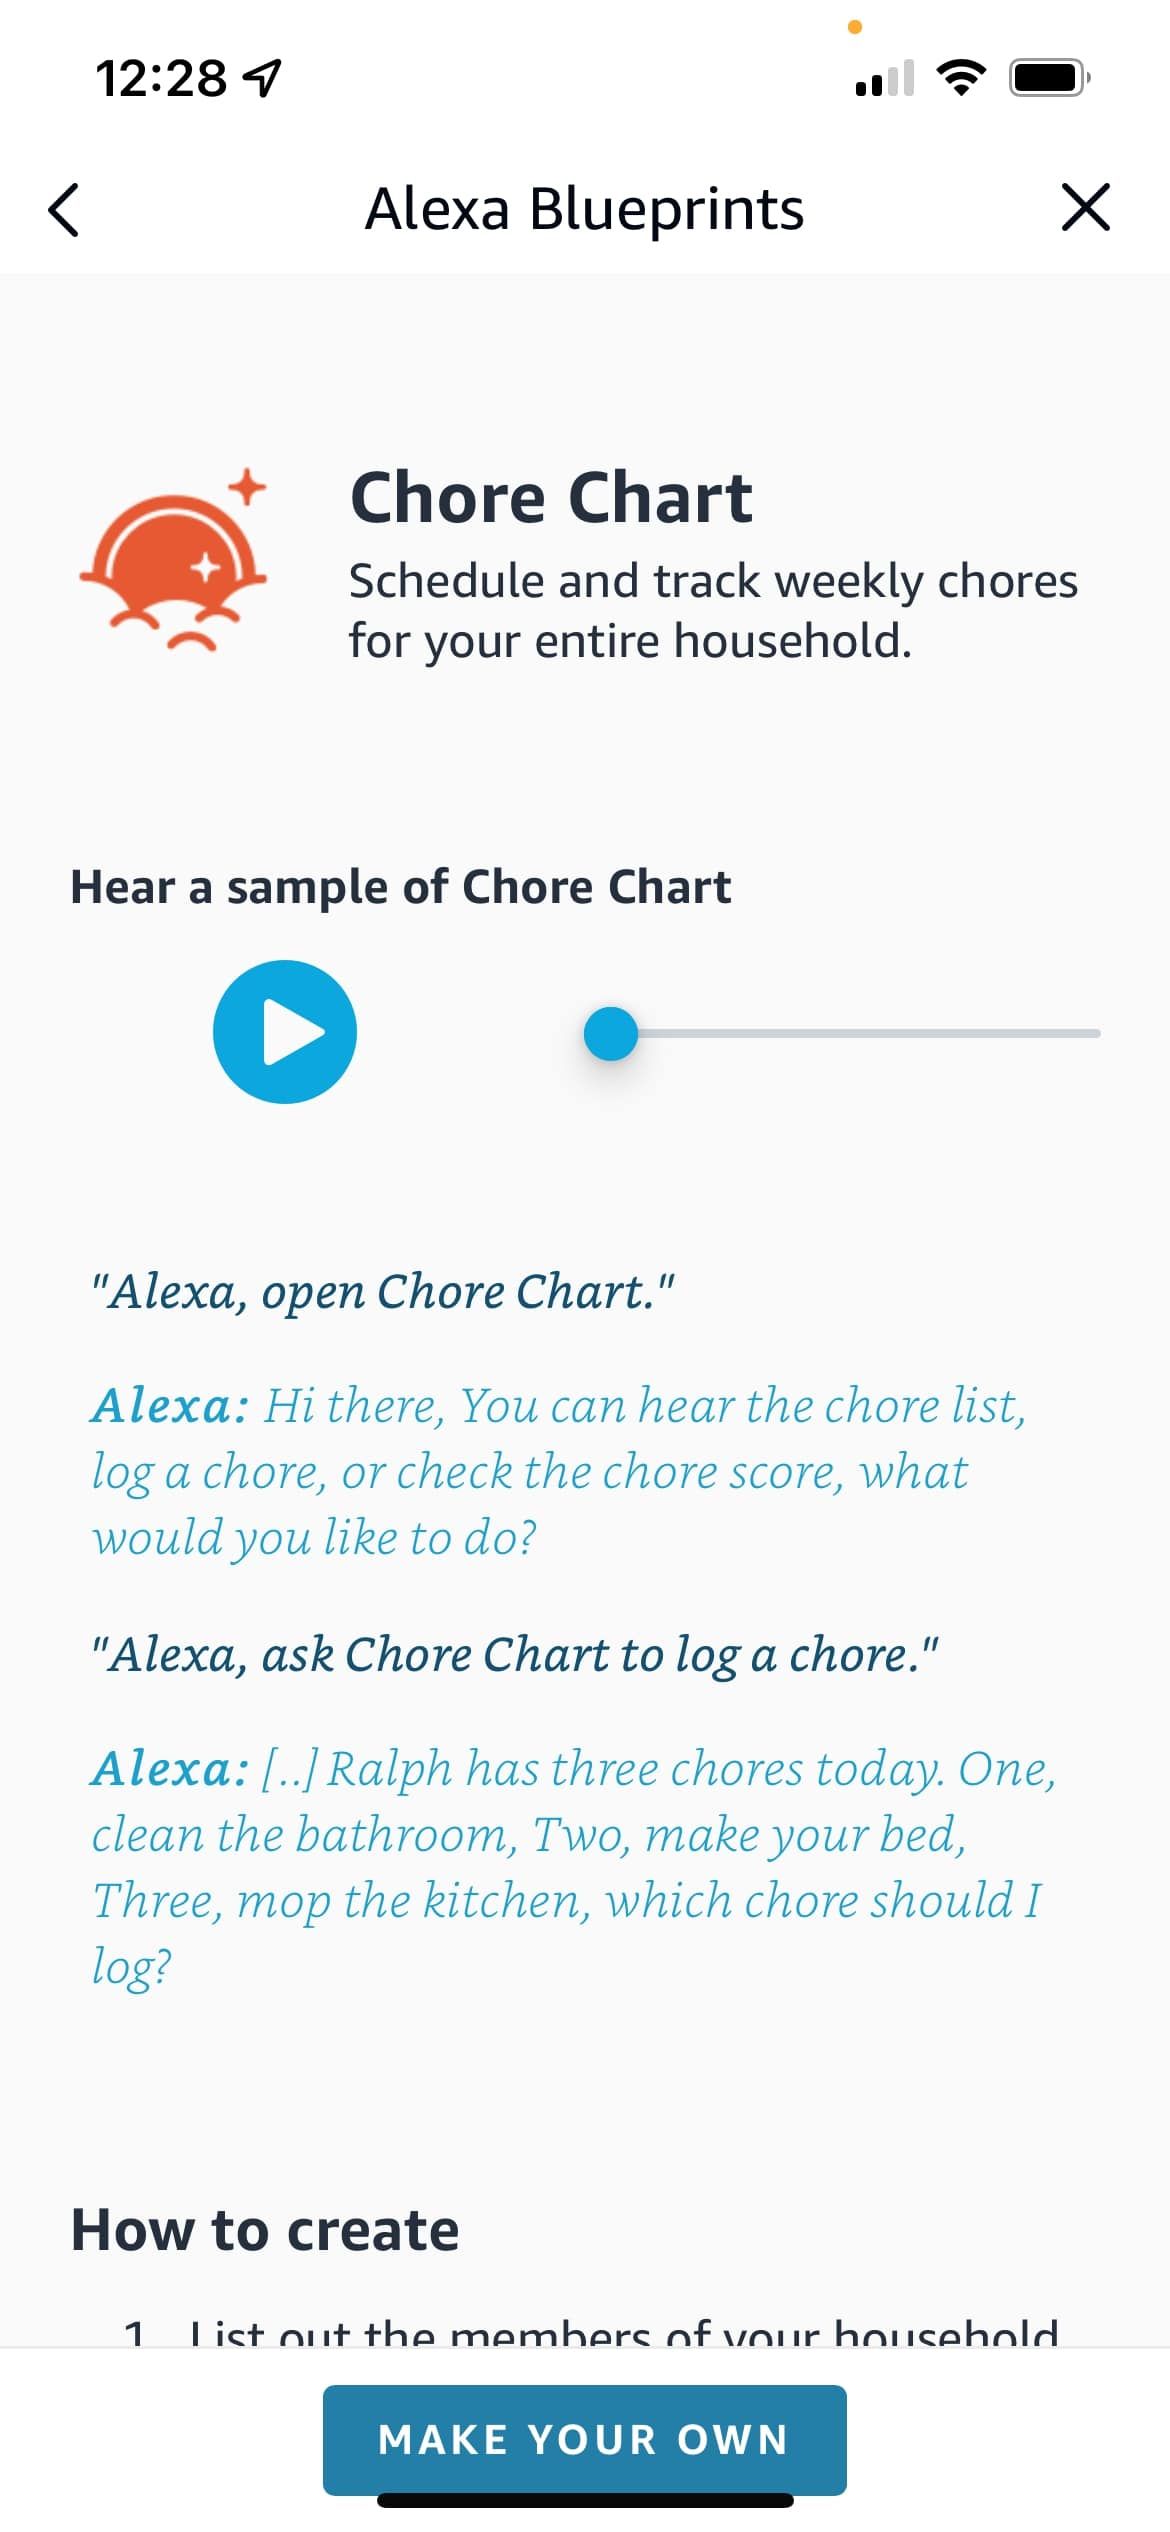 Chore Chart Blueprint main page